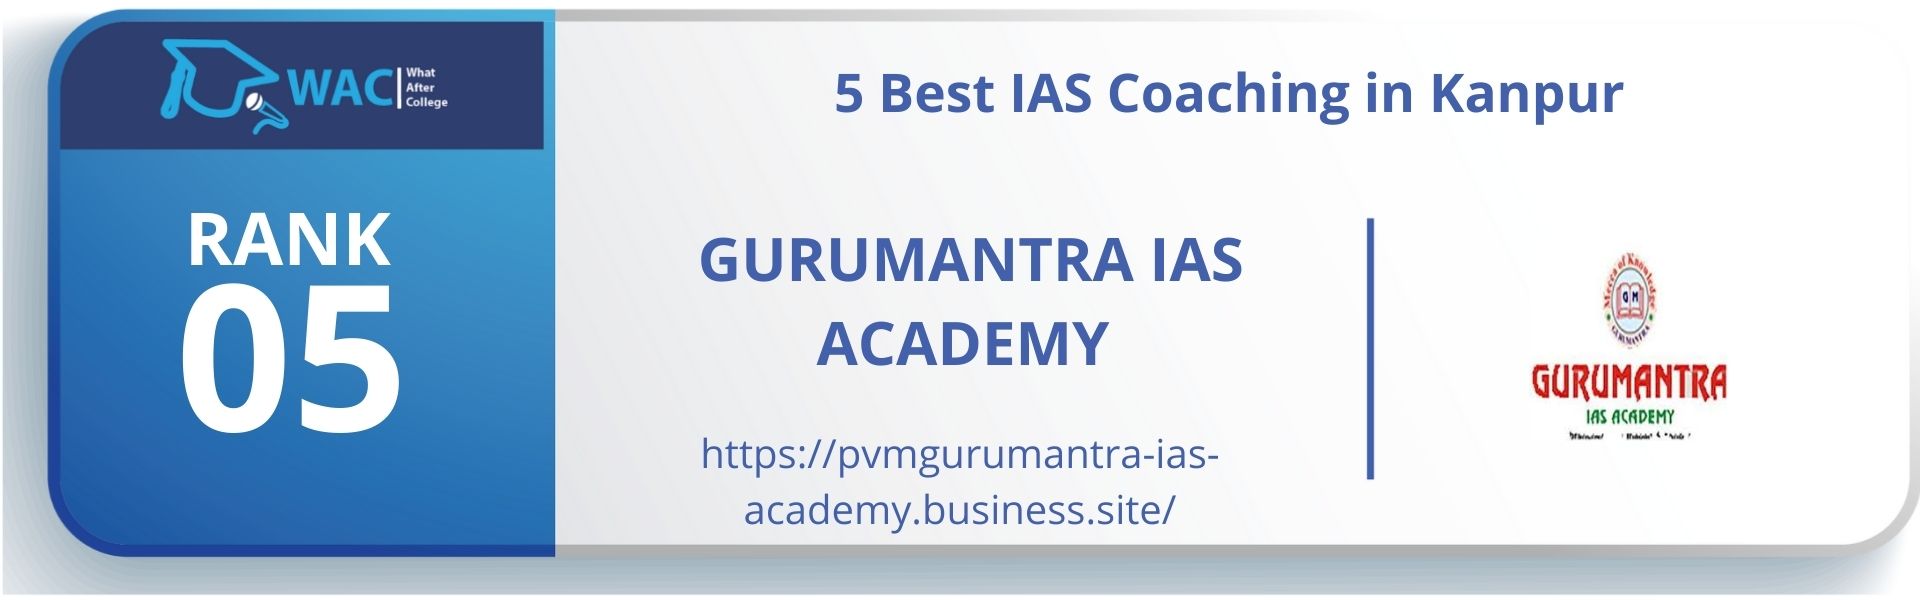 5 Best IAS Coaching in Kanpur Rank 5: Gurumantra IAS Academy in Kanpur